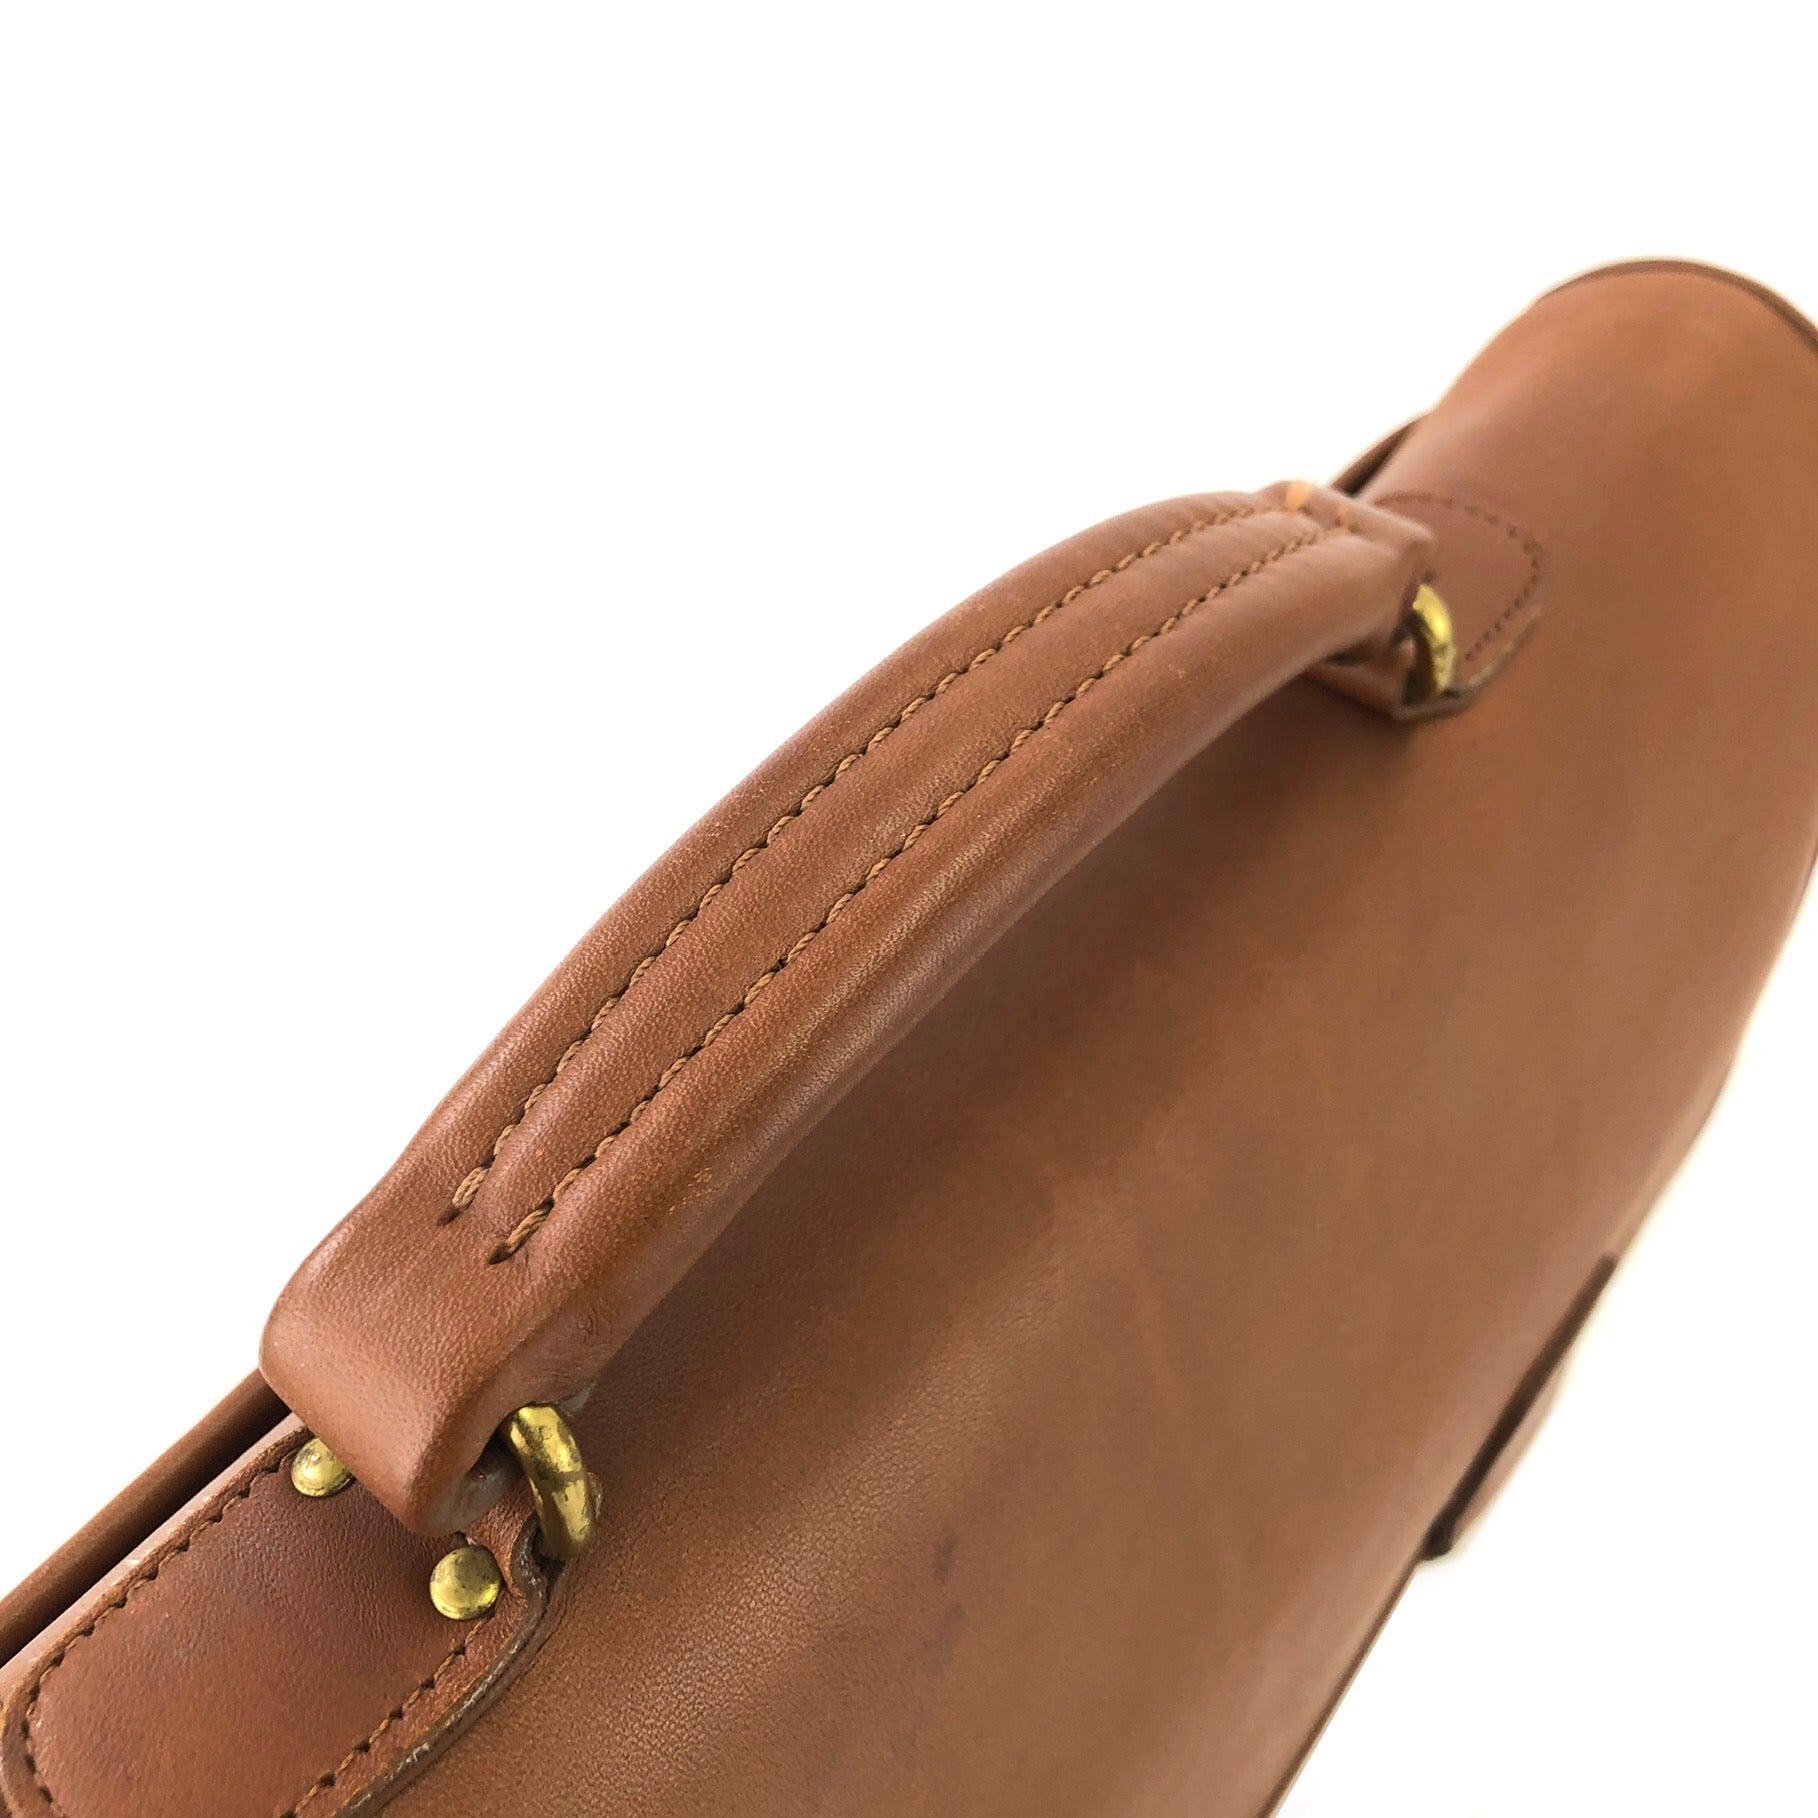 COACH Grab Leather Turnlock Brief Bag Brown Vintage Old euaujd